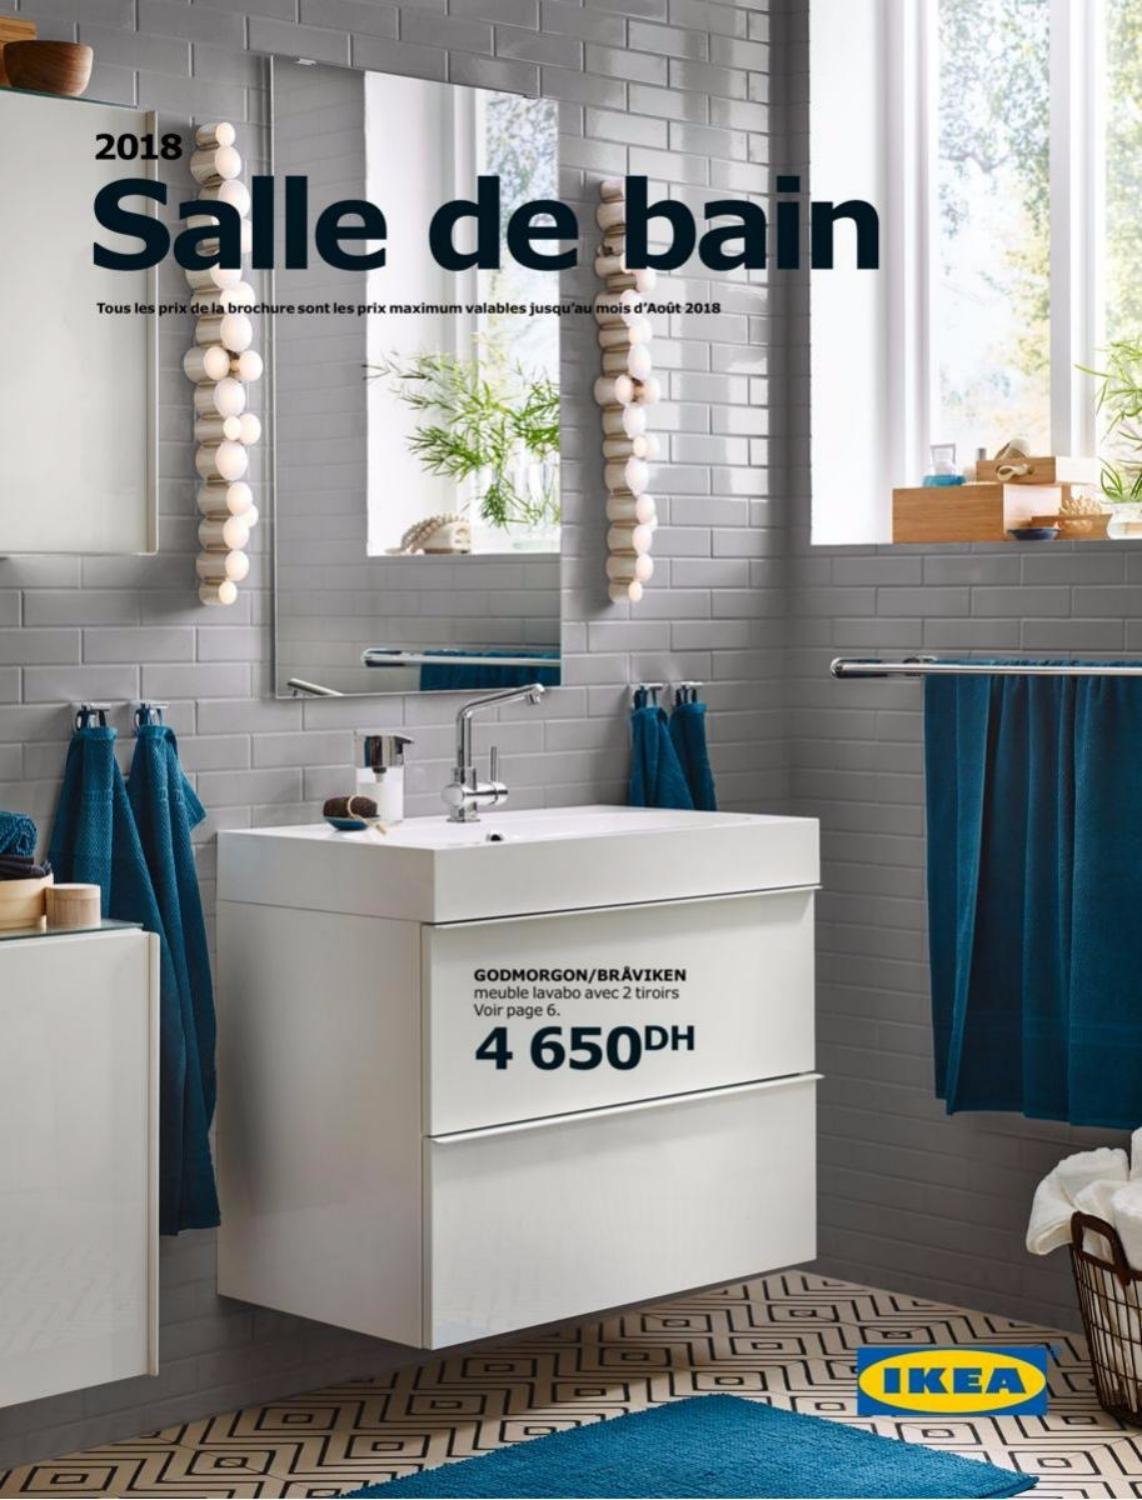 Ikea Salle De Bain 2018 By Solde Au Maroc - Issuu tout Ikéa Salle De Bain